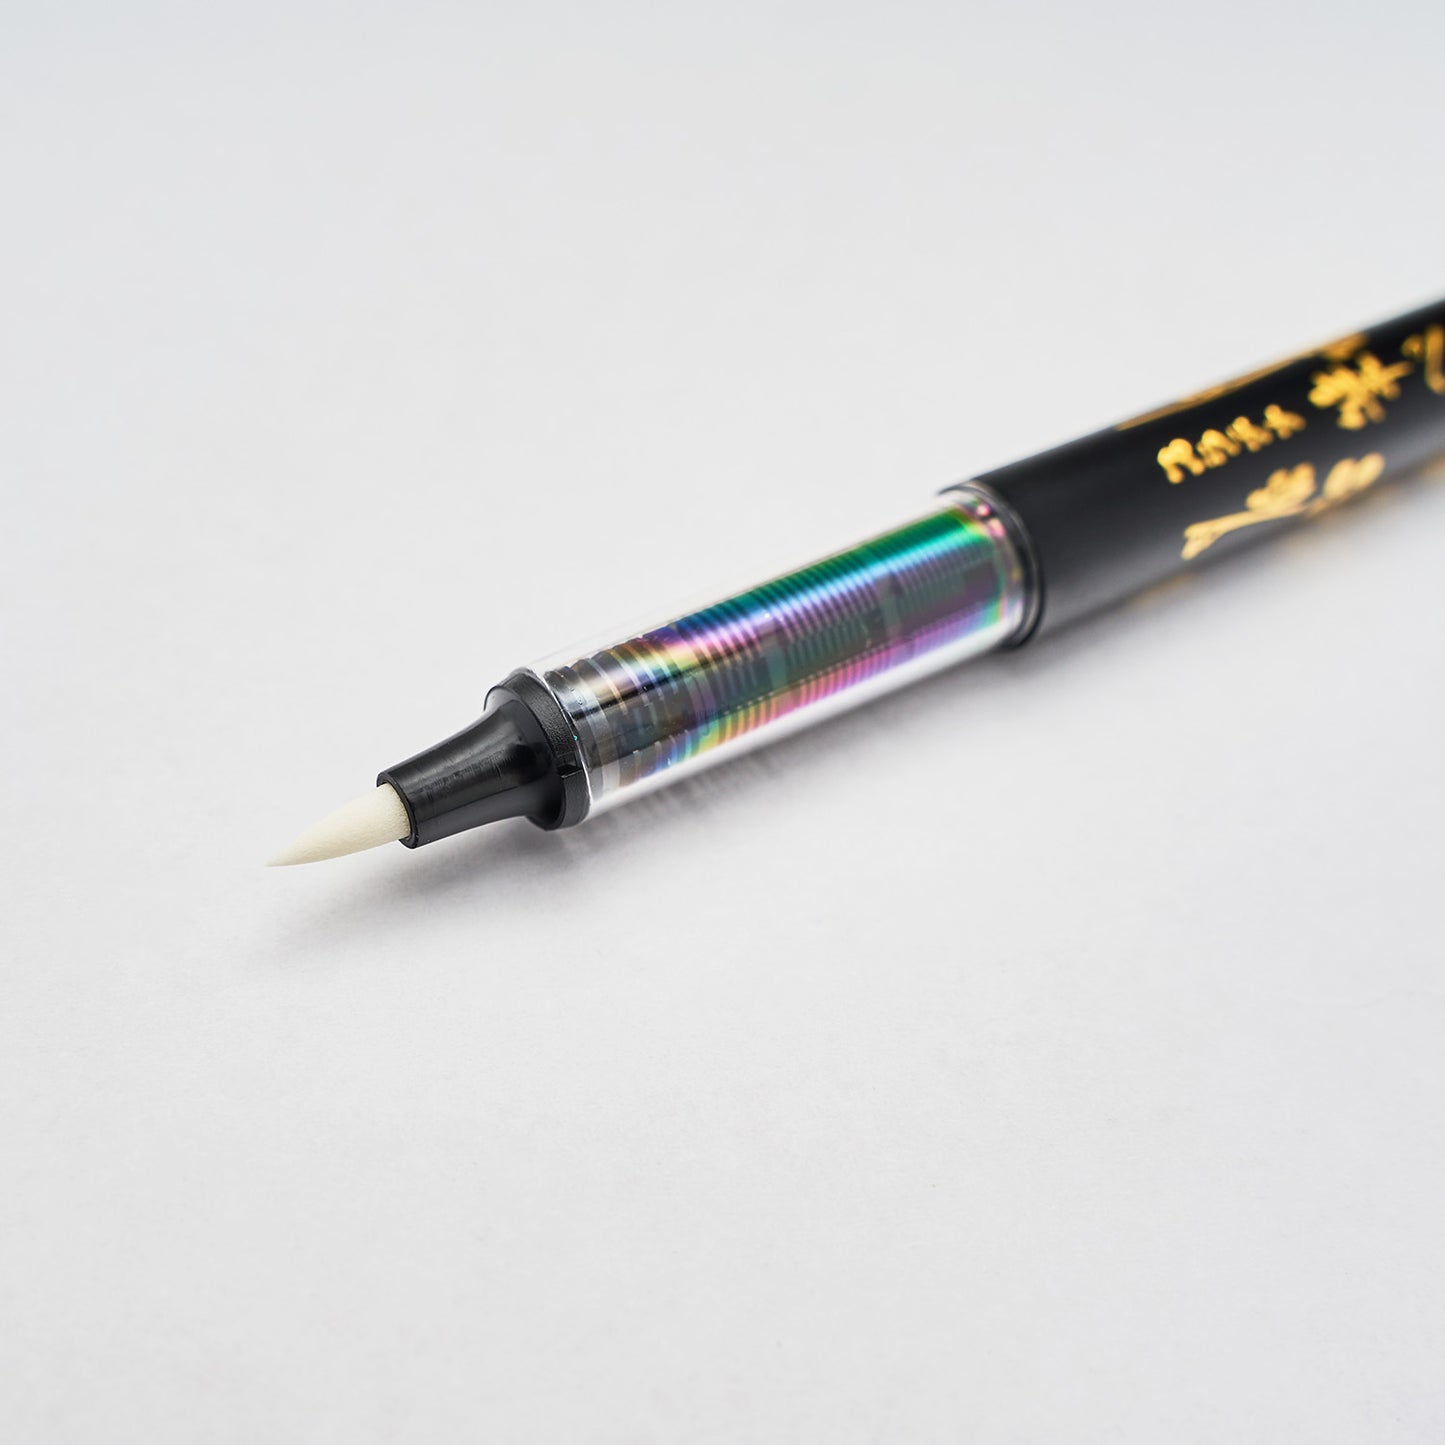 Platinum Refillable Carbon Brush Pen Tip Up close